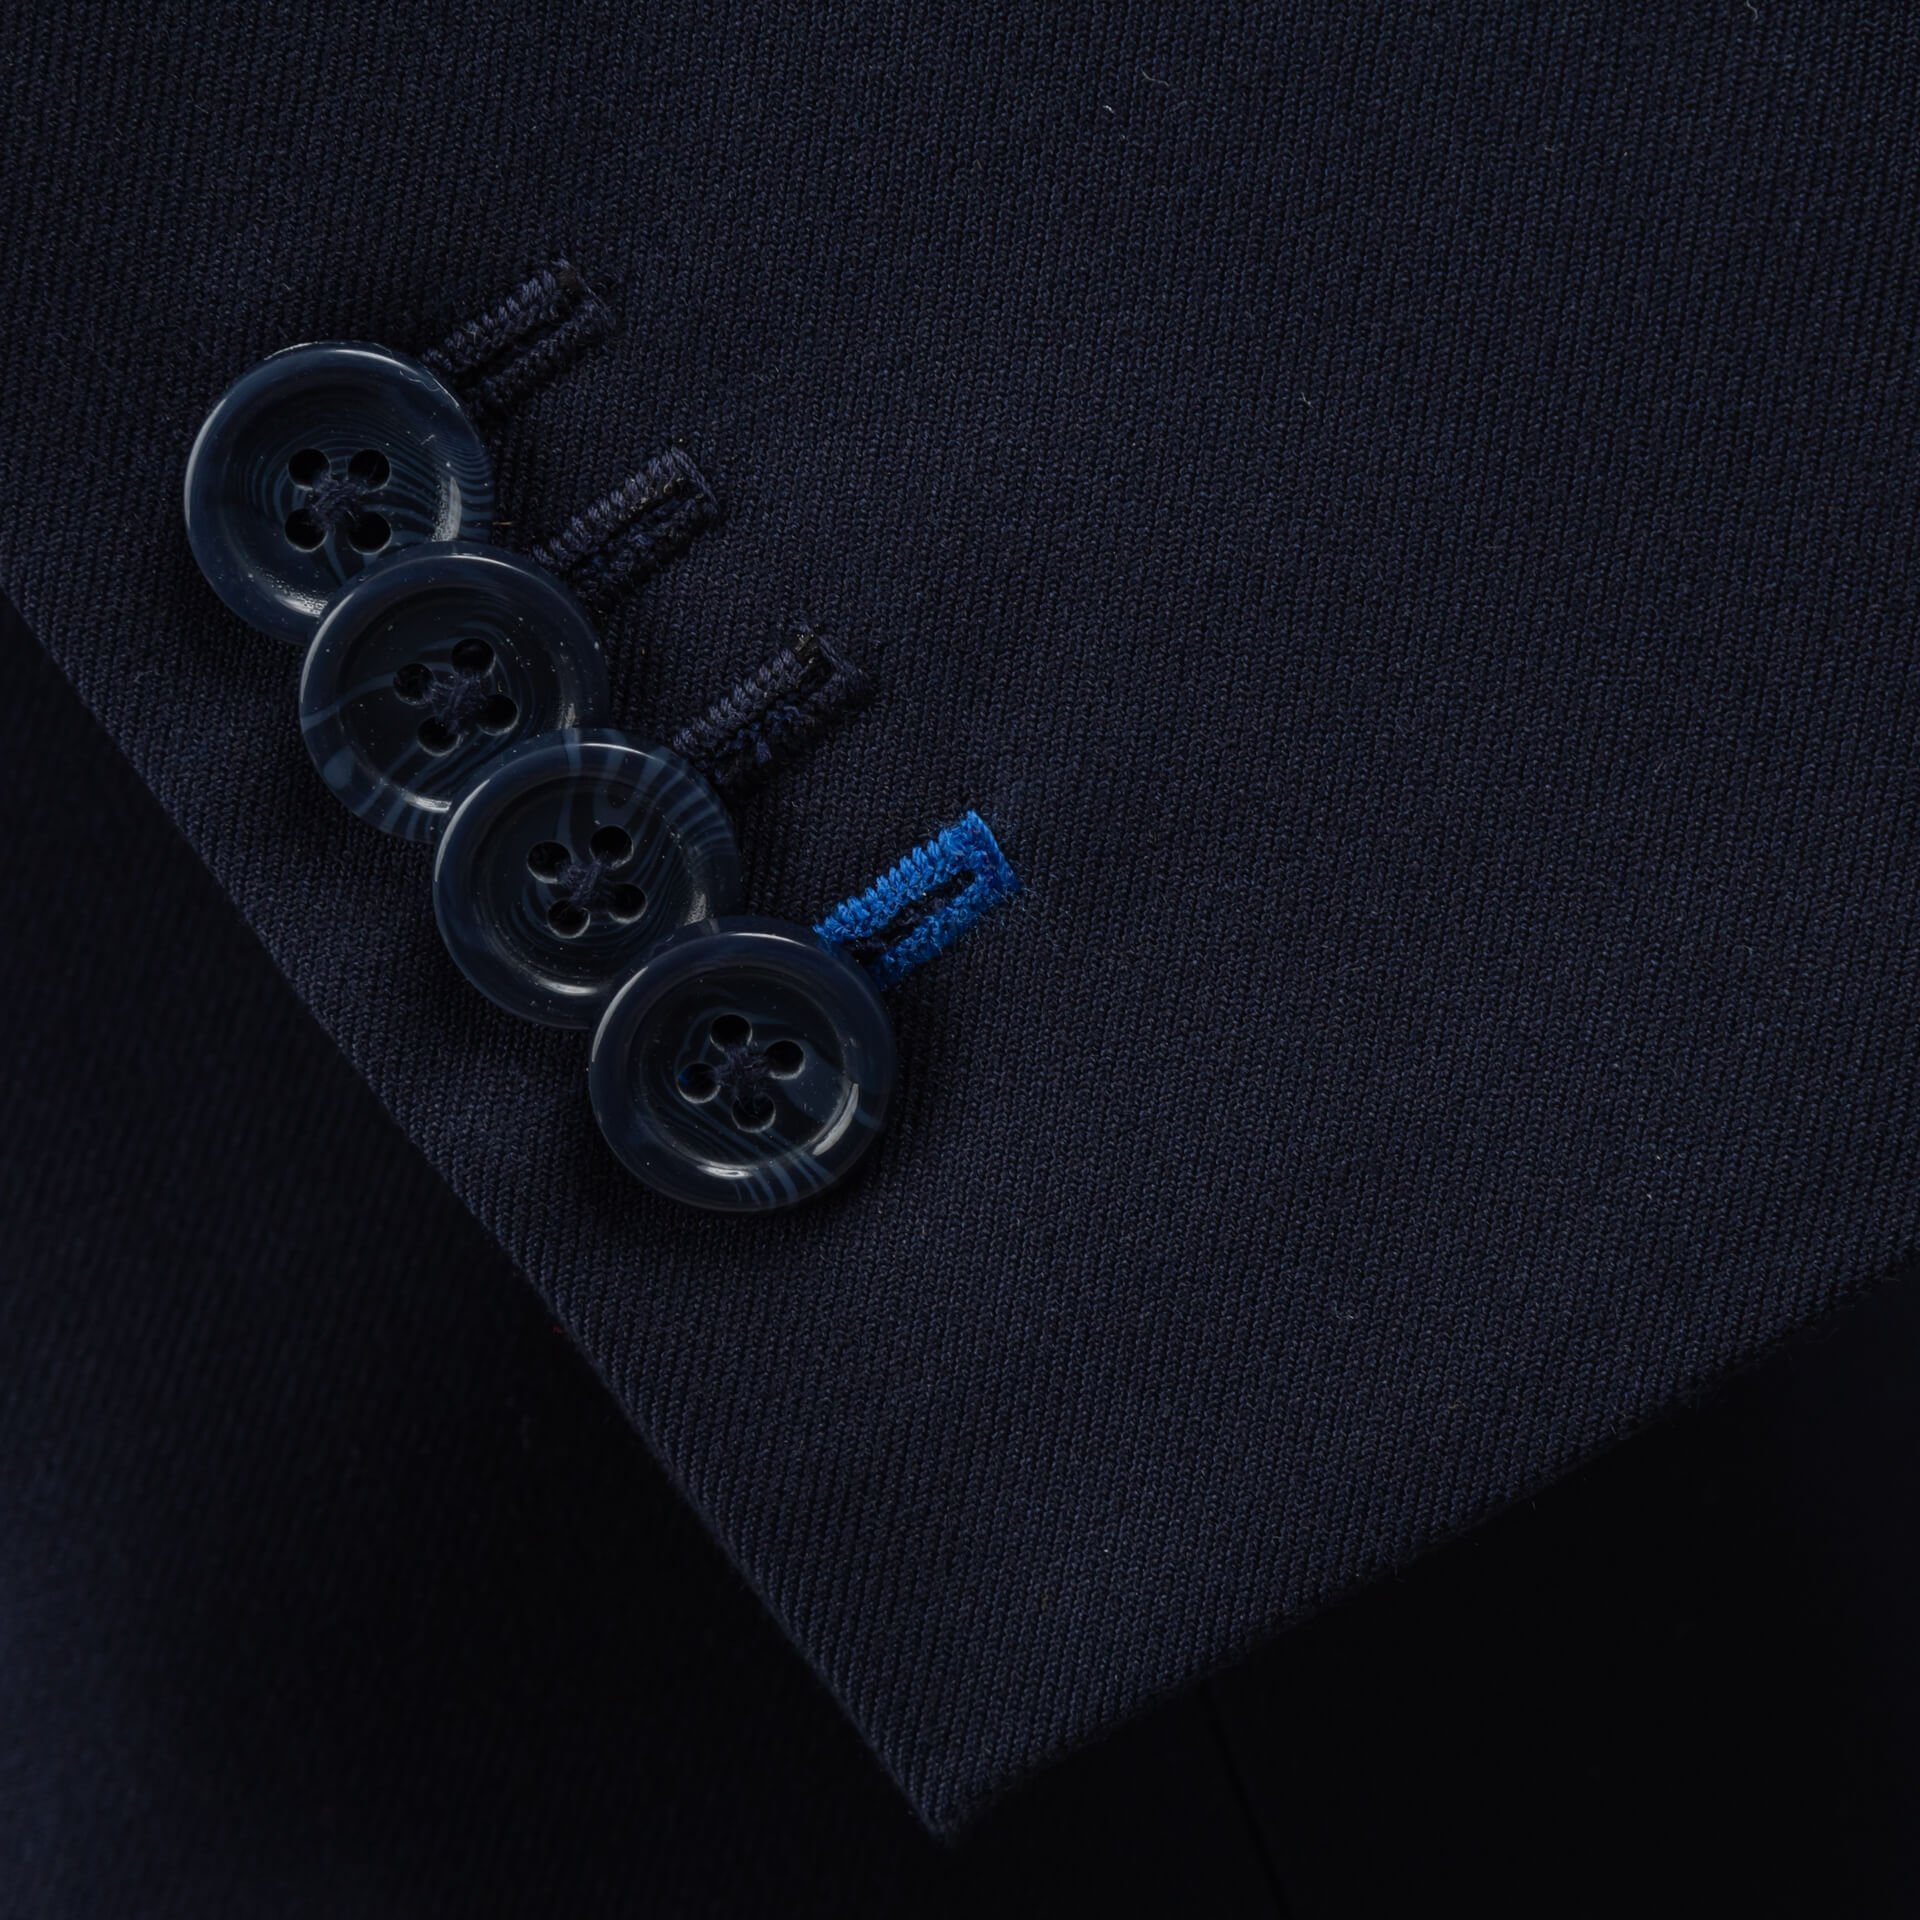 Tailor Made Suit Dark Blue